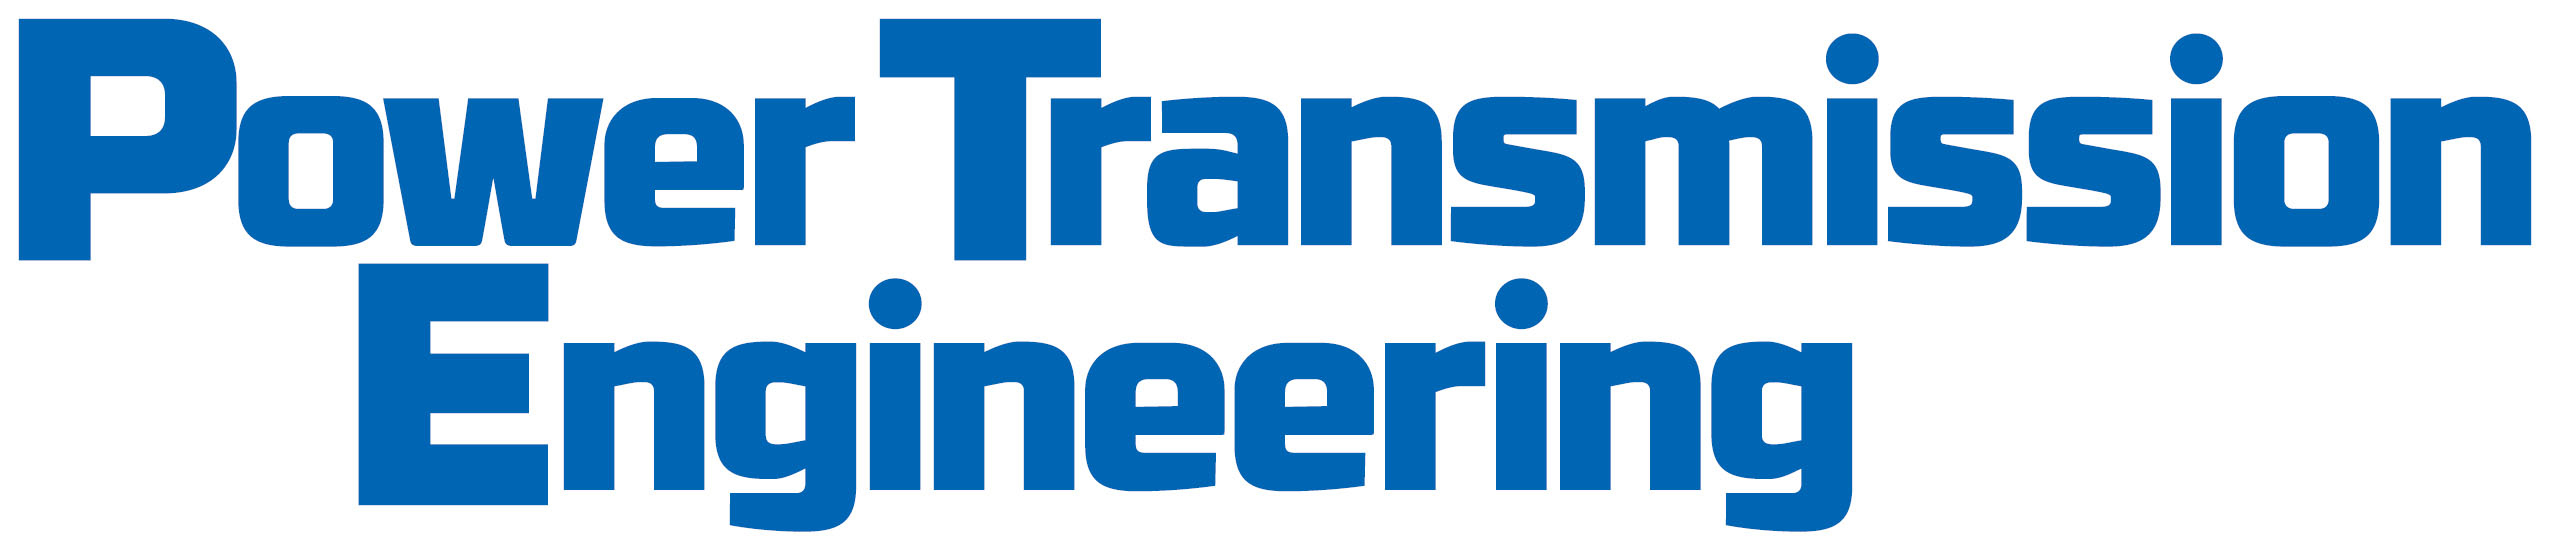 Power Transmission Engineering Logo